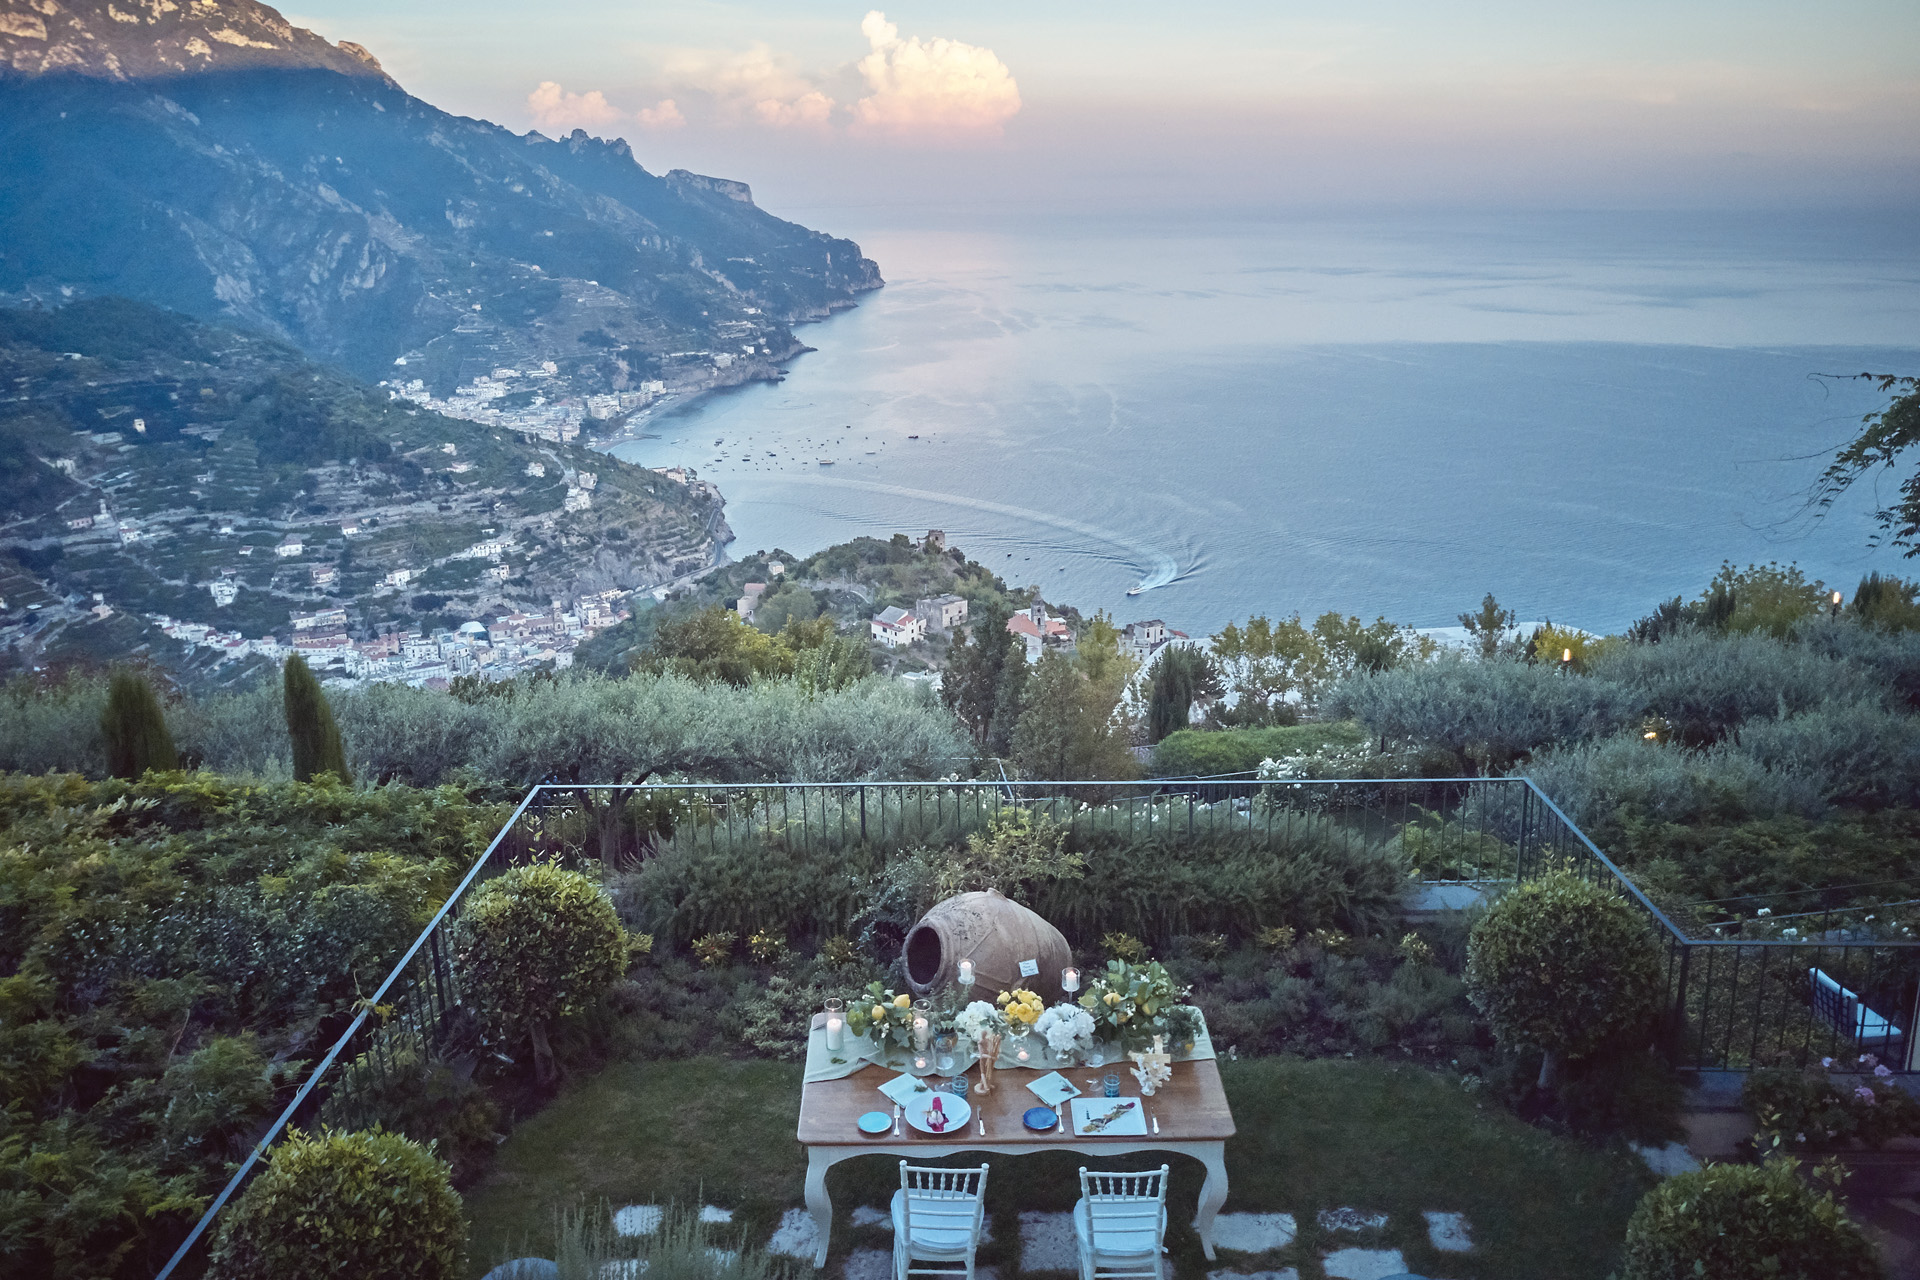 Hotel Caruso for weddings in Ravello on the Amalfi Coast